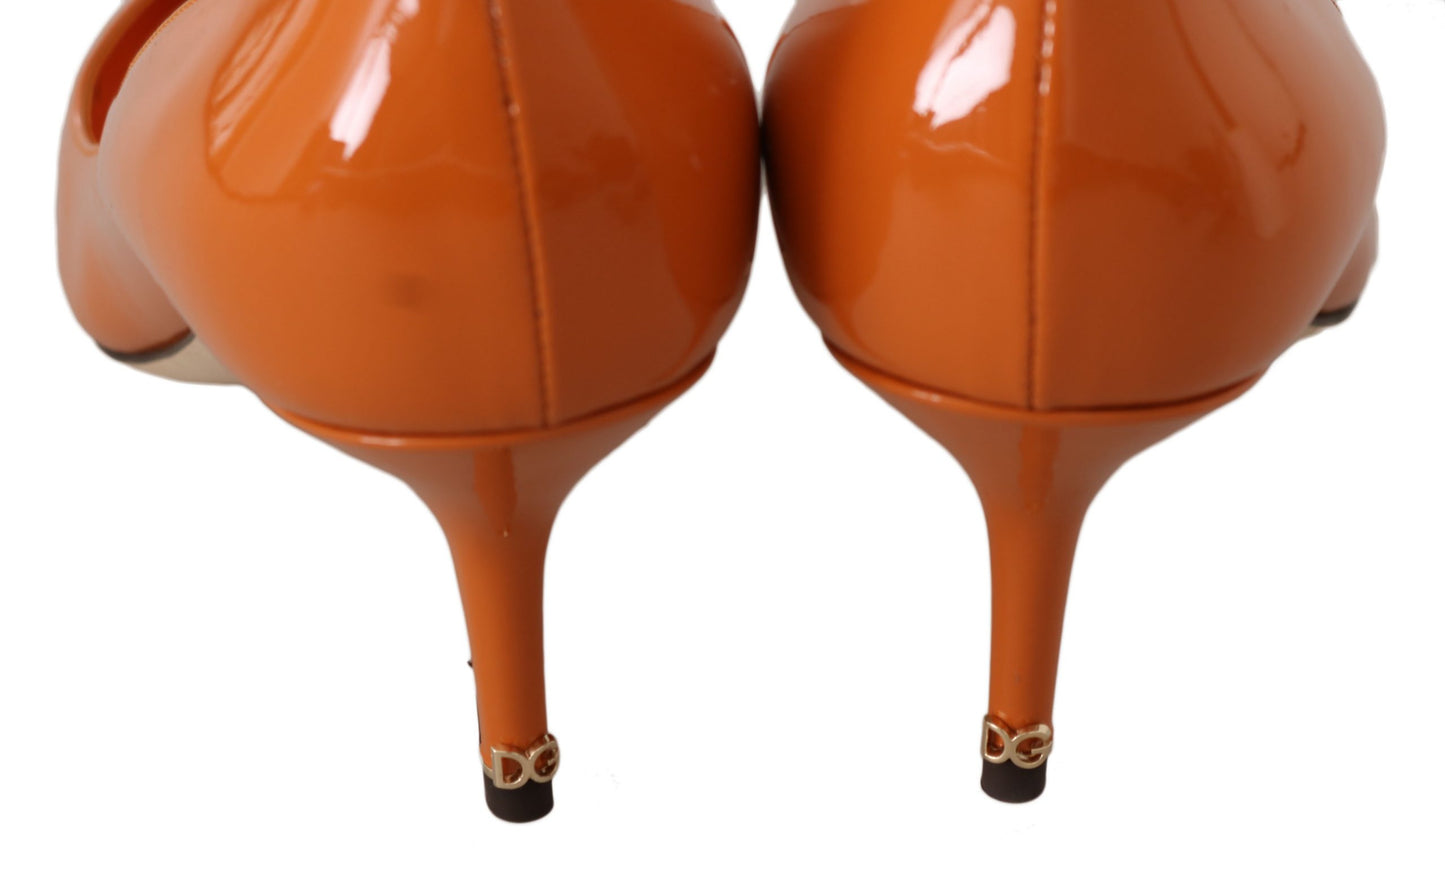 Elegant Orange Leather Heels Pumps